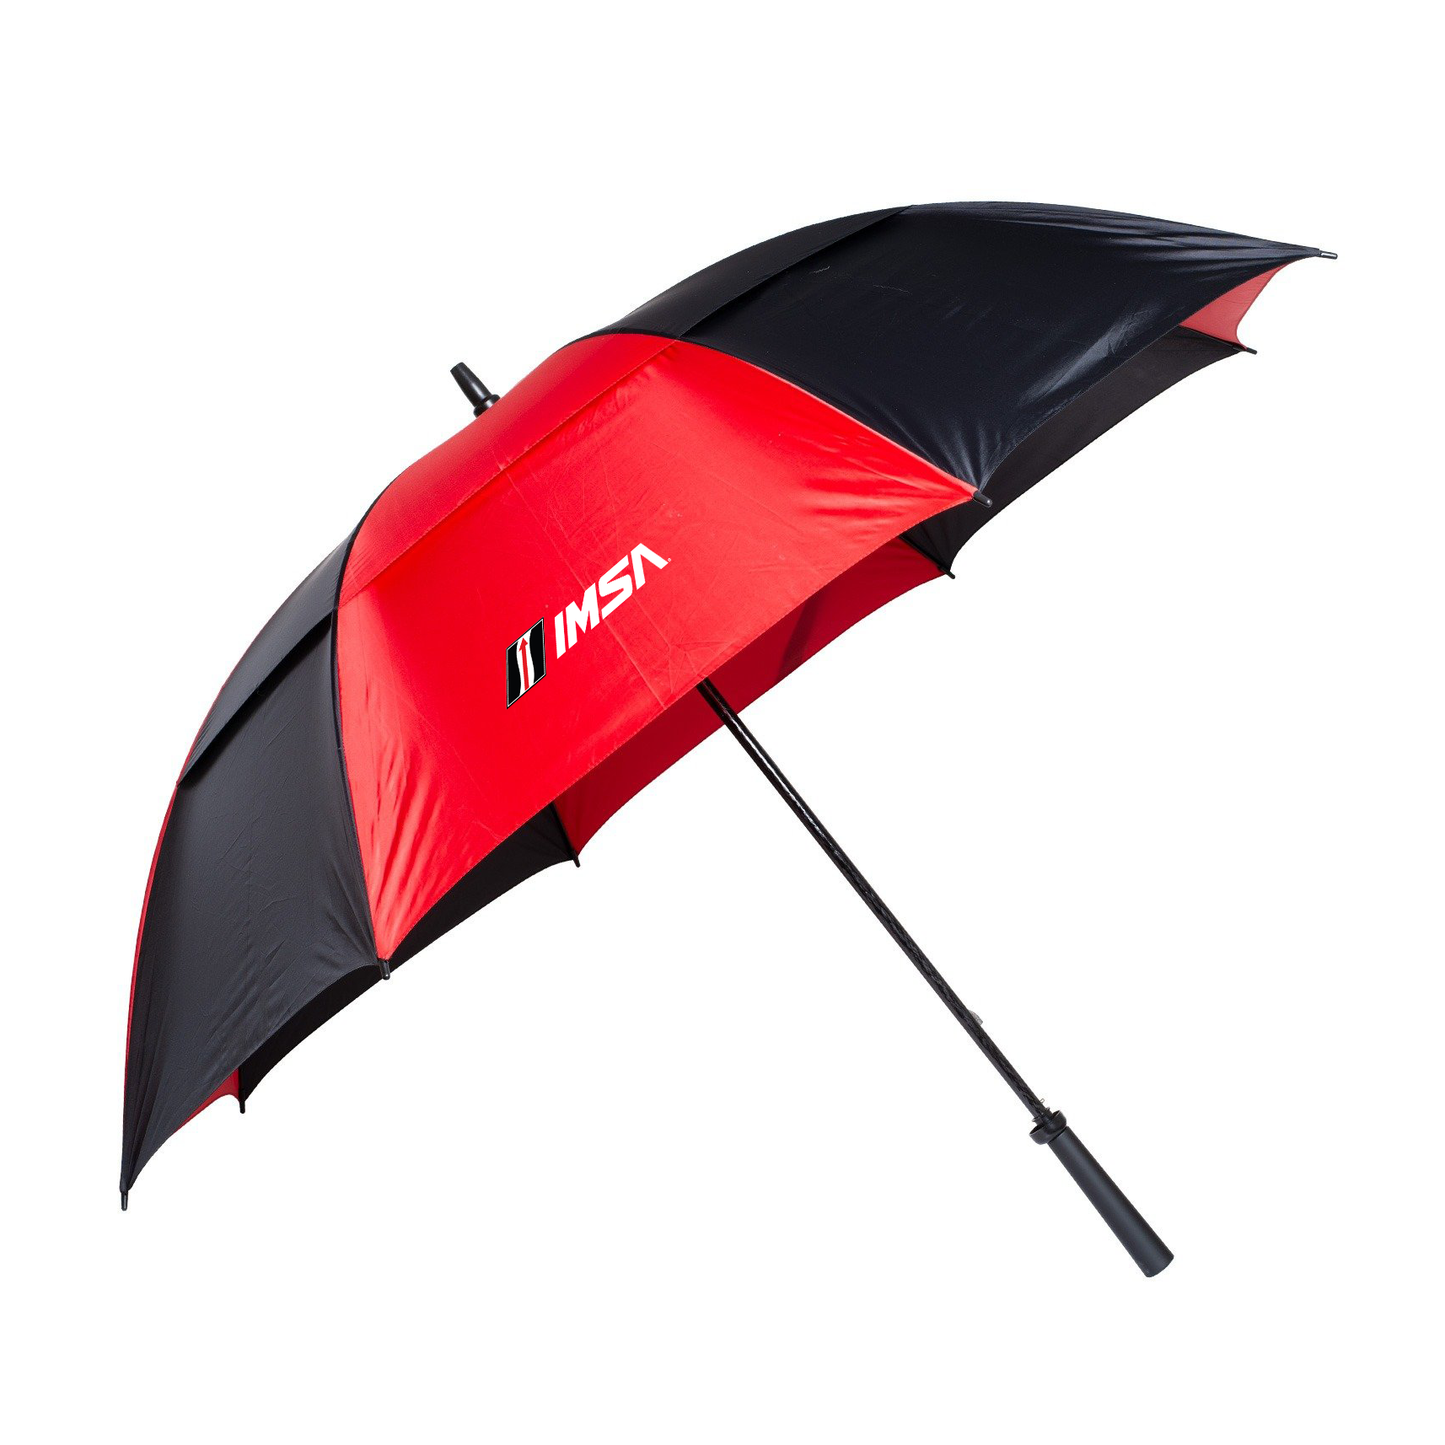 IMSA Red and Black Umbrella